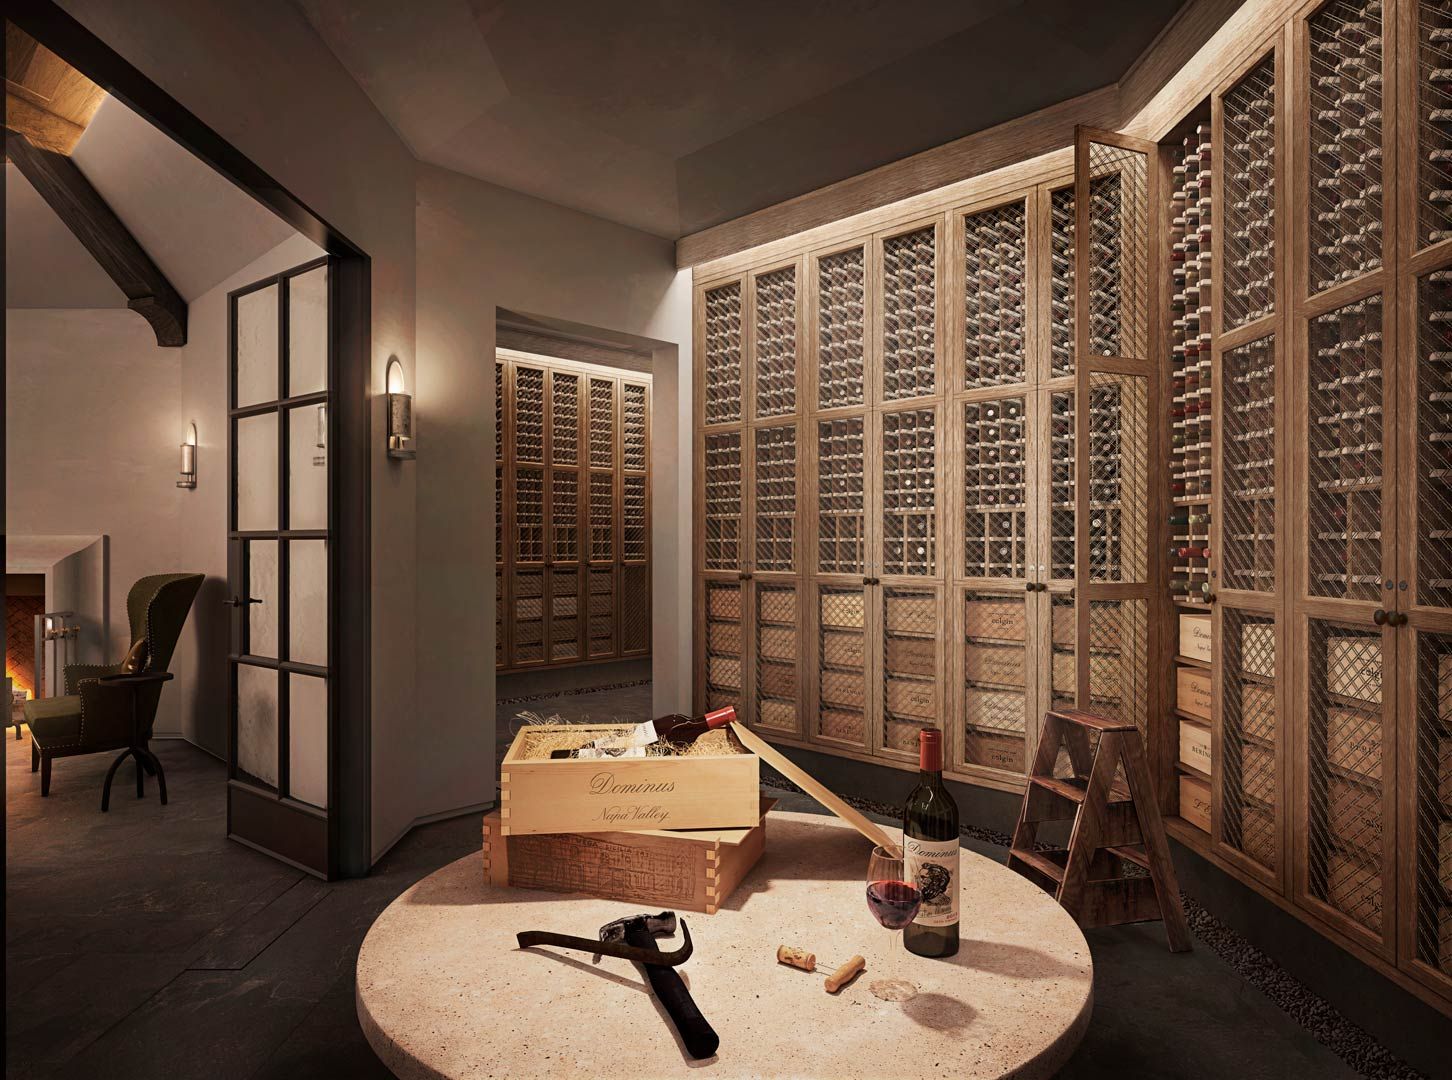 Rustic wine cellar design in a luxury home